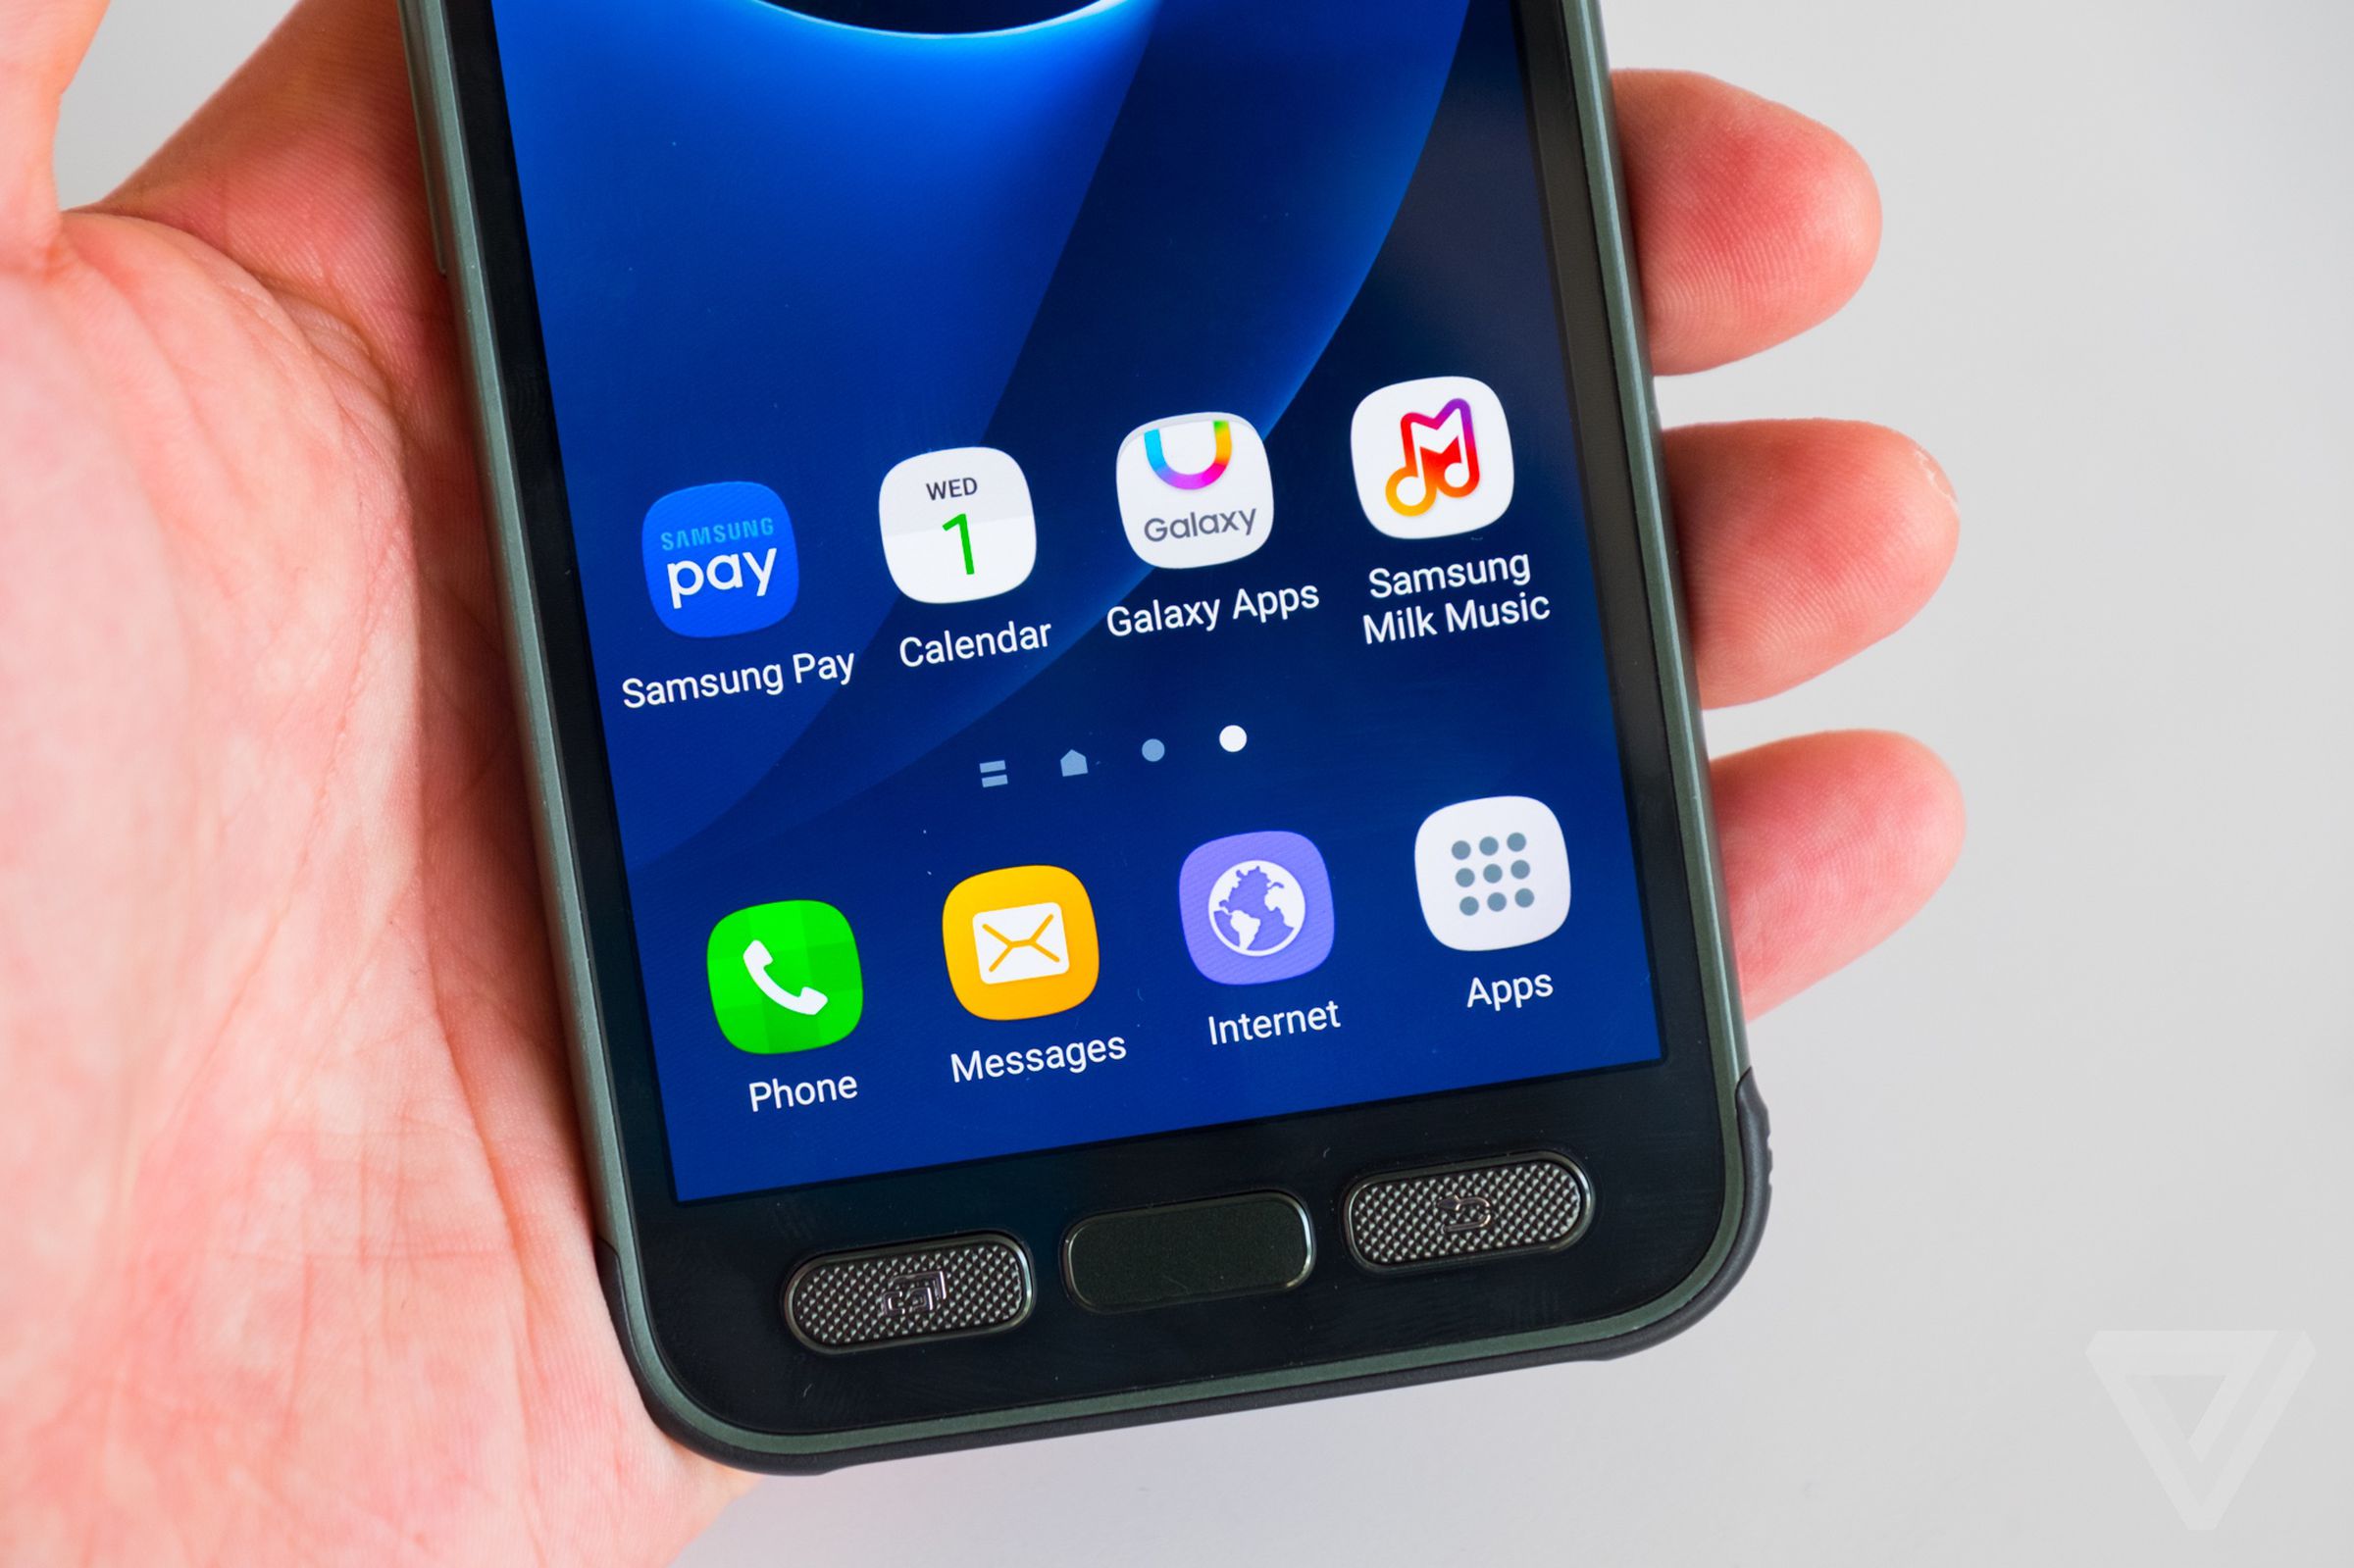 Samsung Galaxy S7 Active hands-on photos